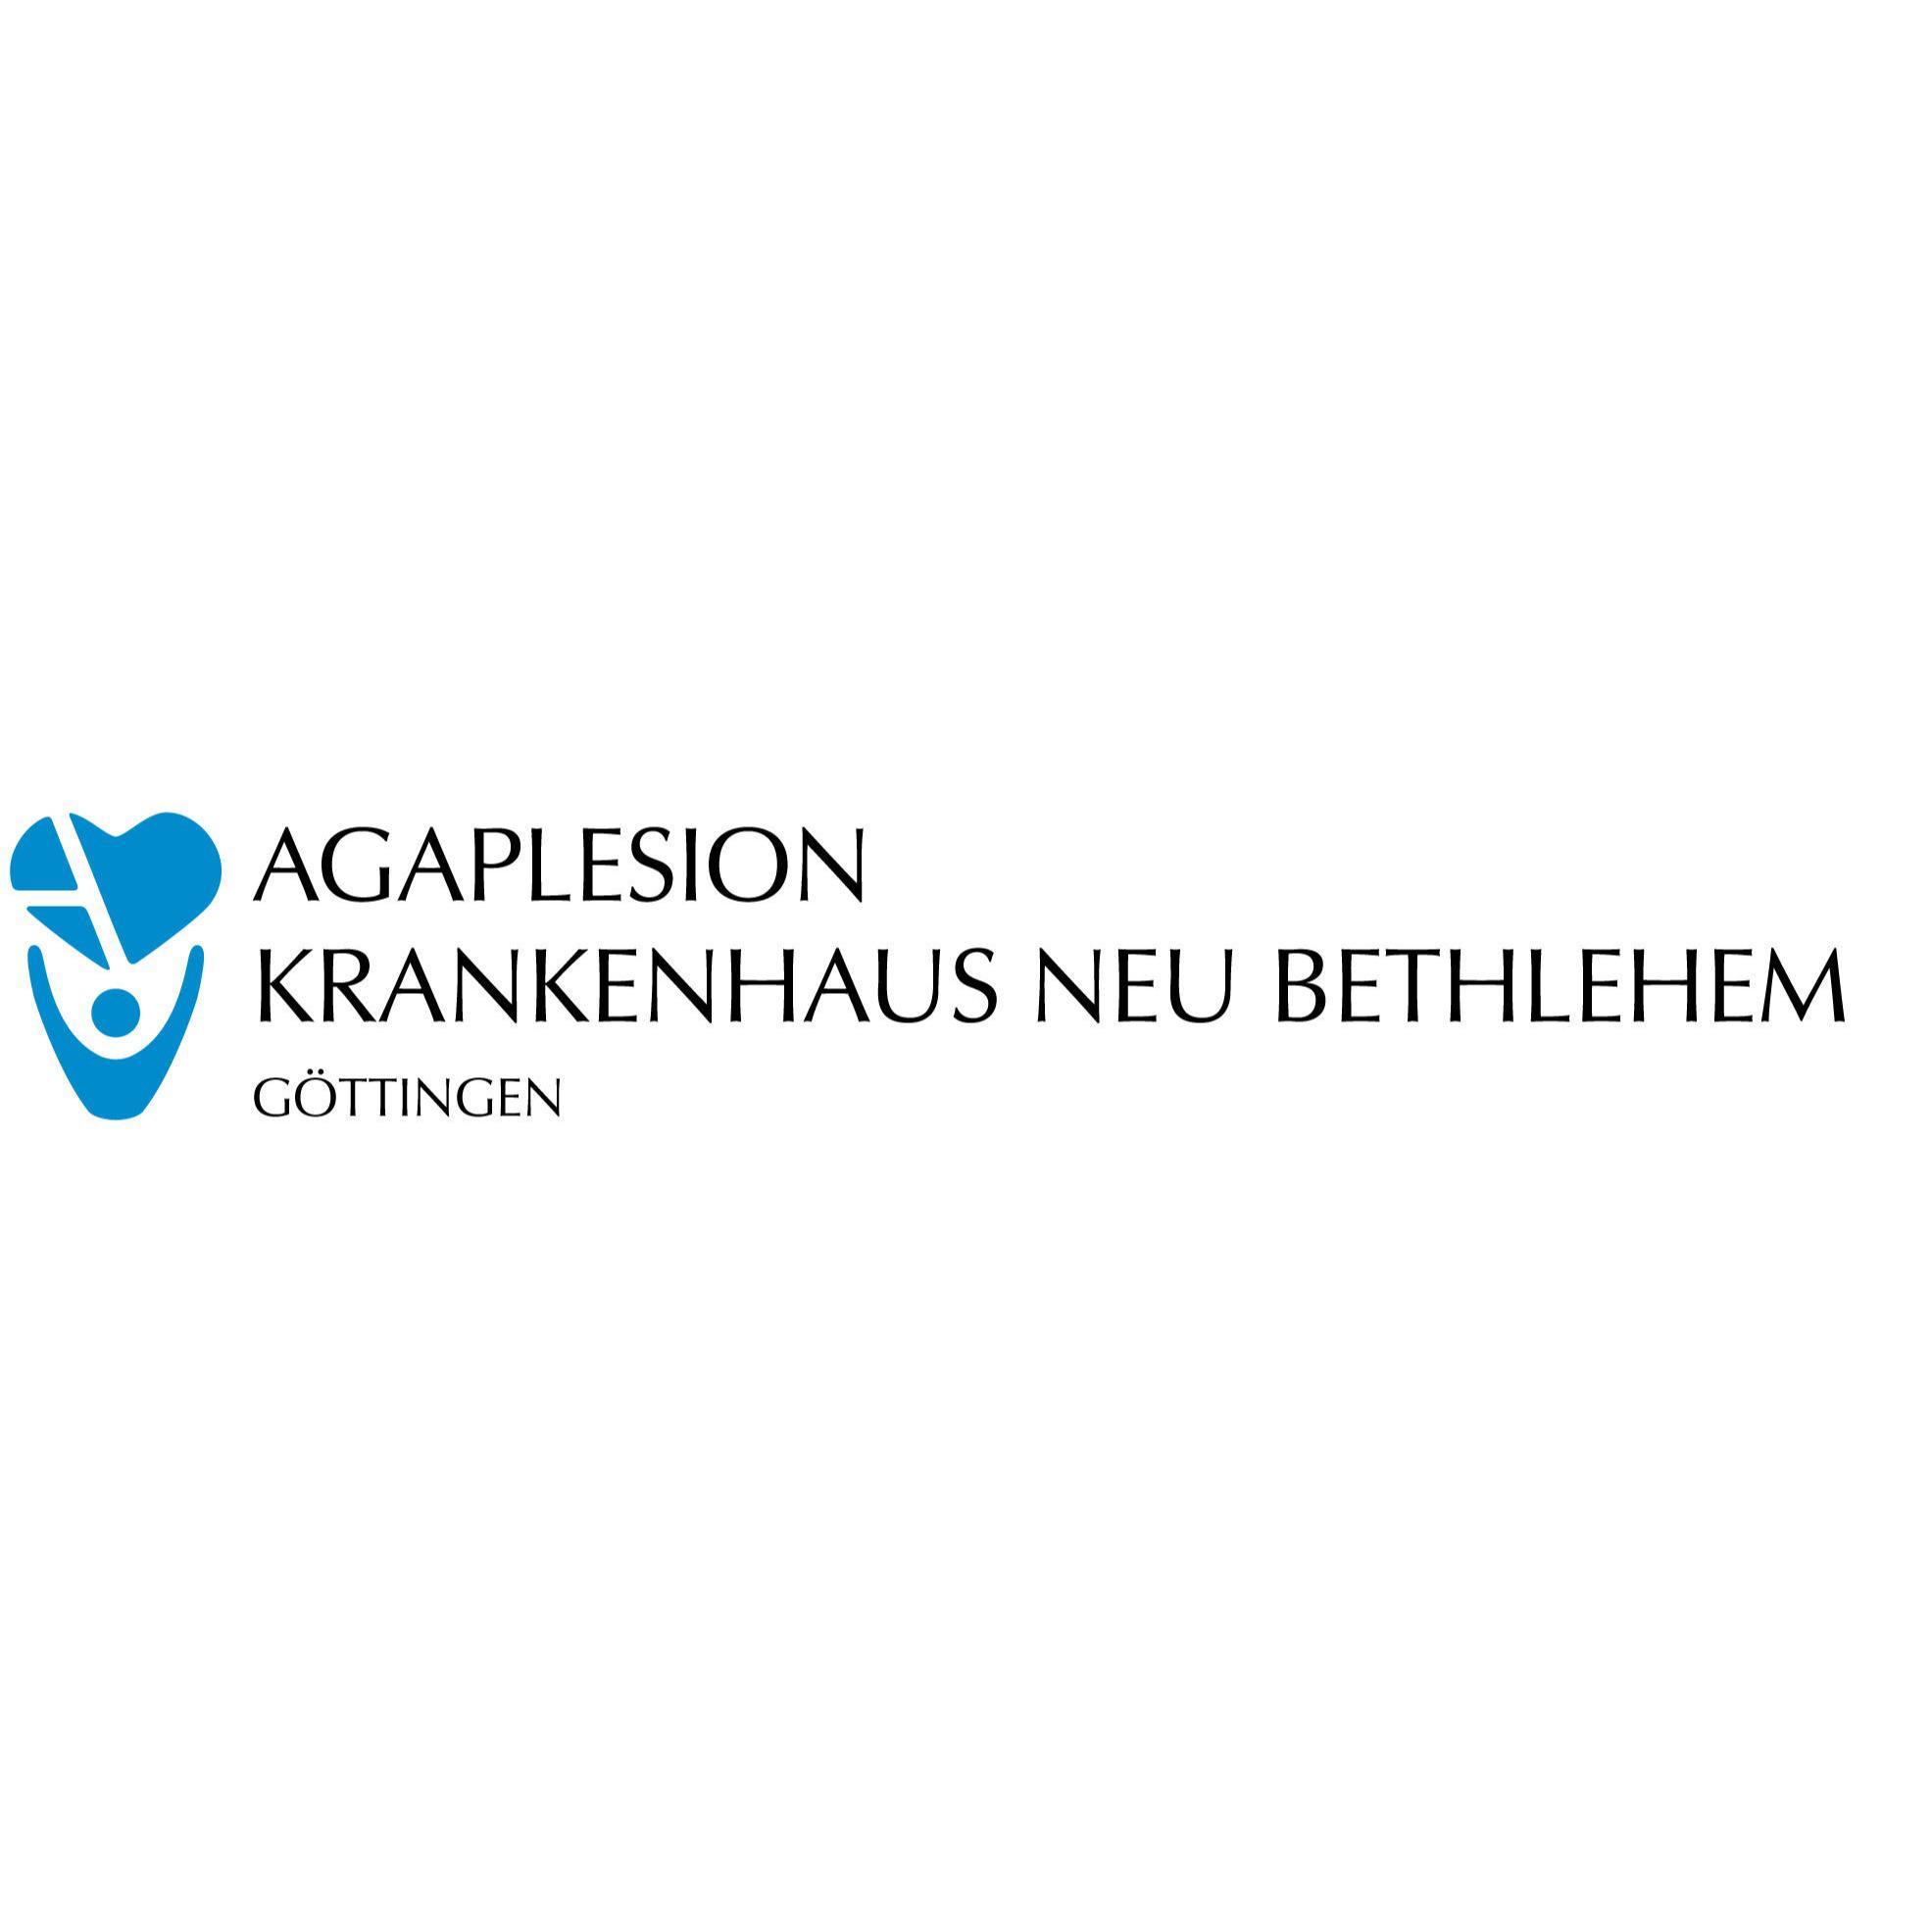 Klinik für Chirurgie, Gefäßchirurgie, Viszeralchirurgie, Endoskopische Chirurgie, Plastische Chirurgie, Ästhetische Chirurgie am AGAPLESION KRANKENHAUS NEU BETHLEHEM in Göttingen - Logo